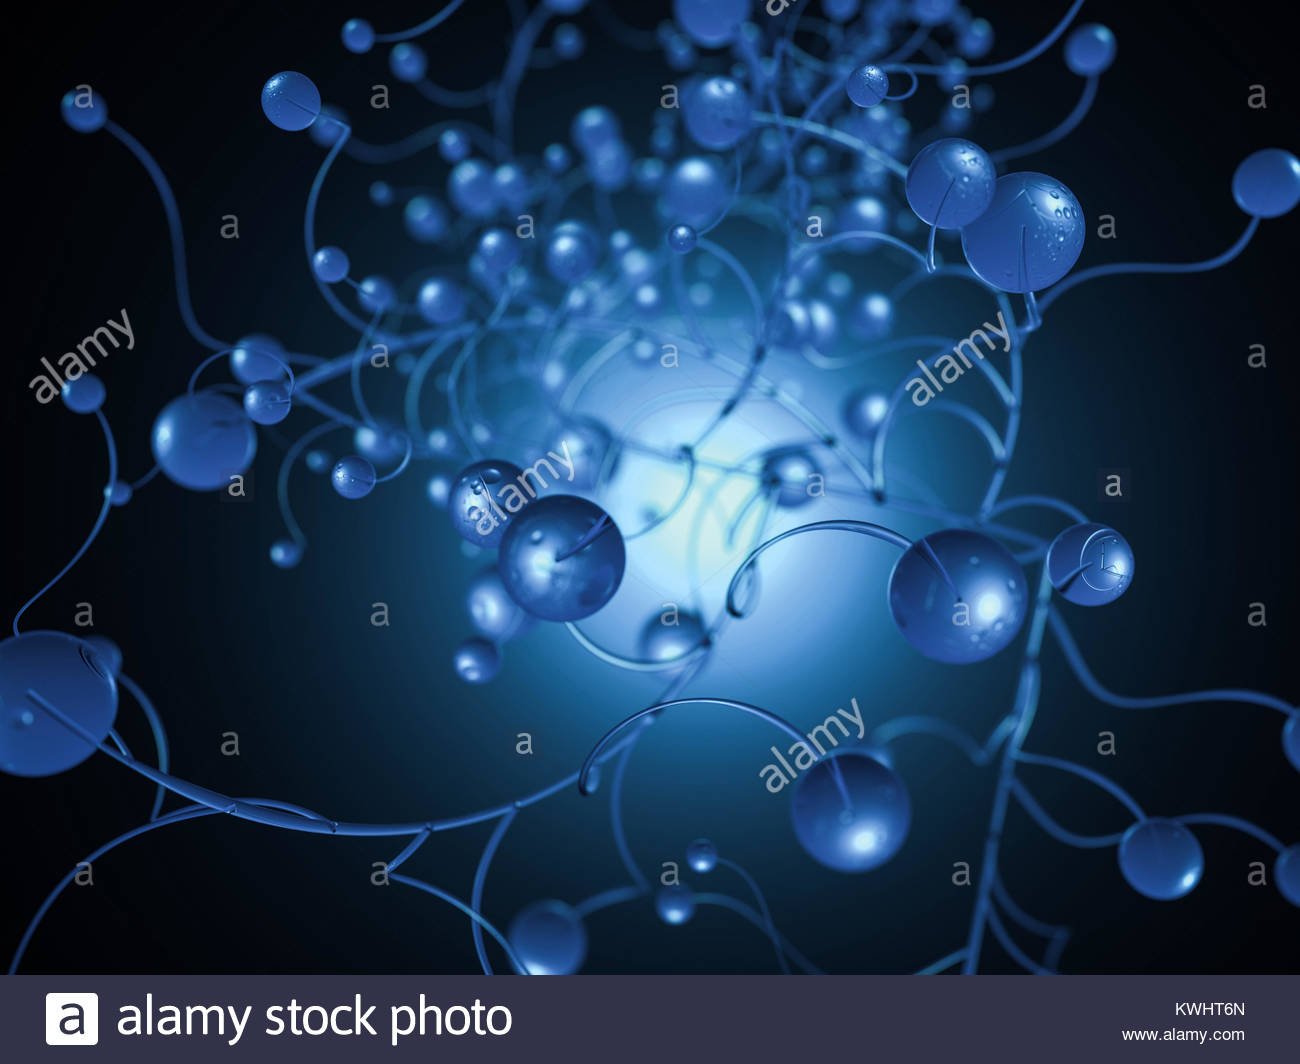 Molecule illustration over biology medicine scientific background